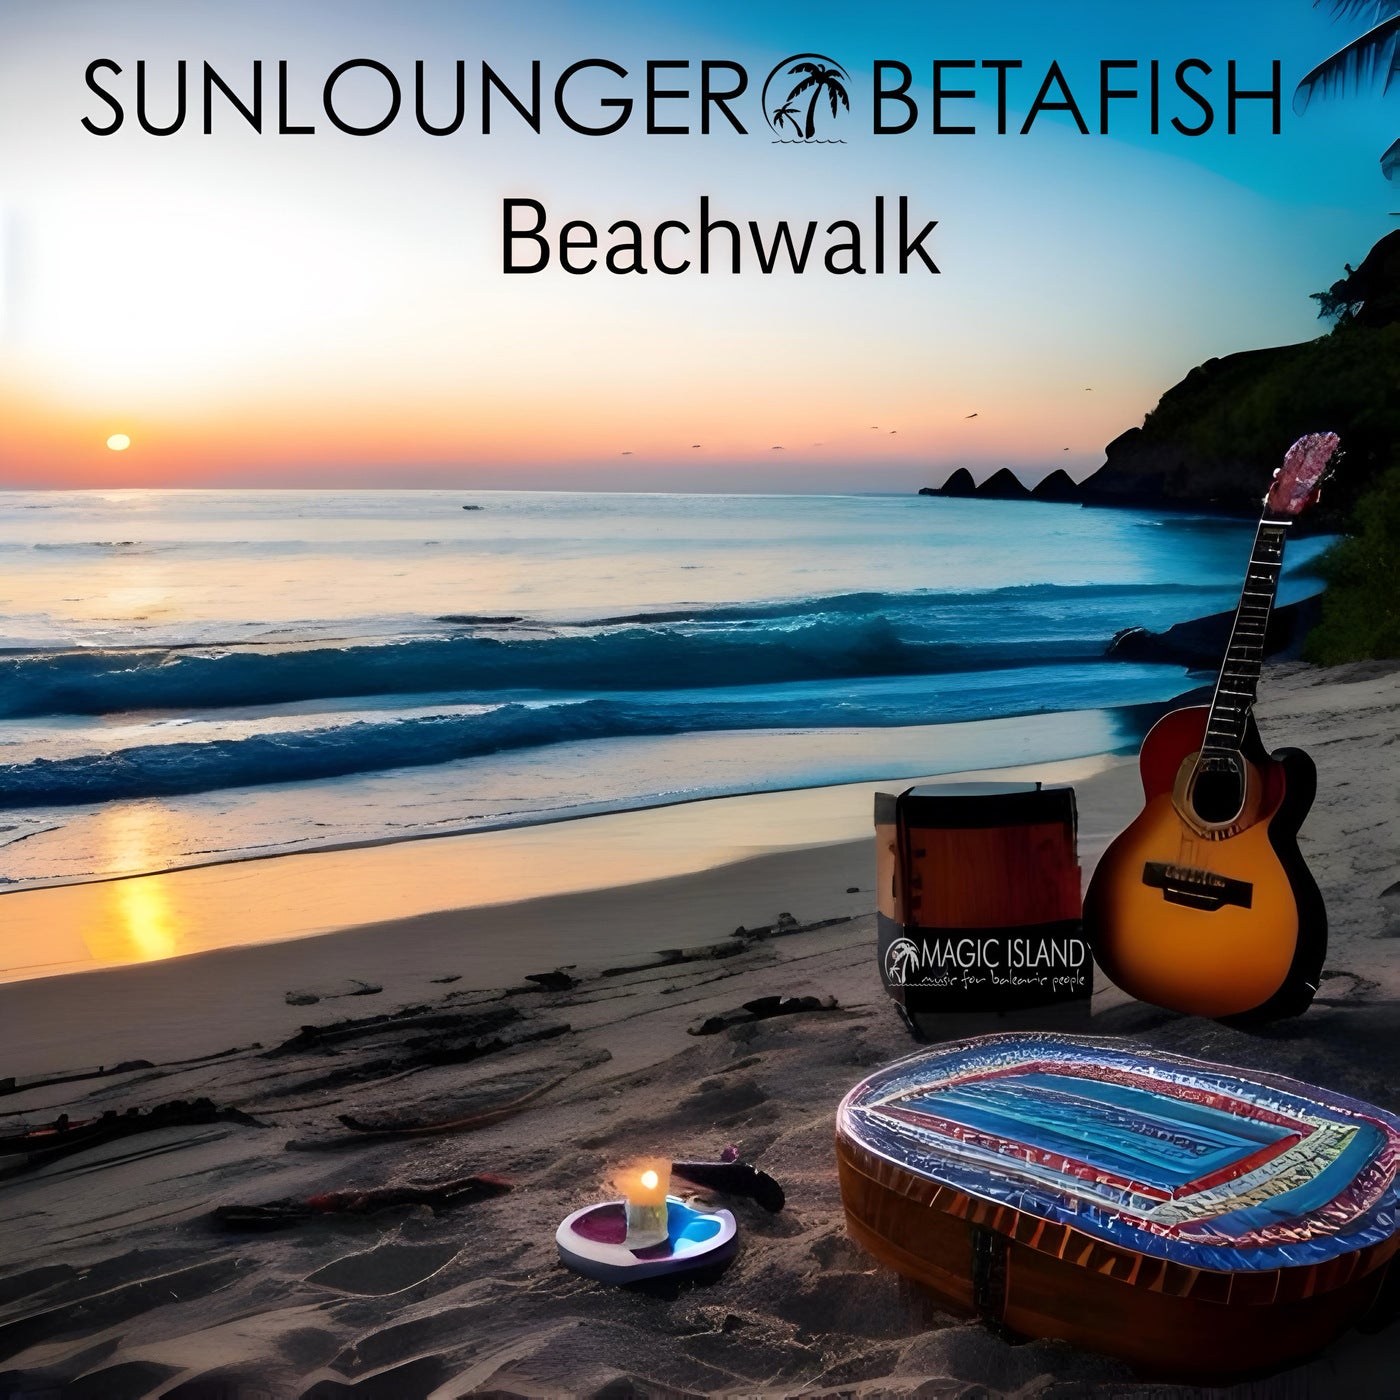 Beachwalk